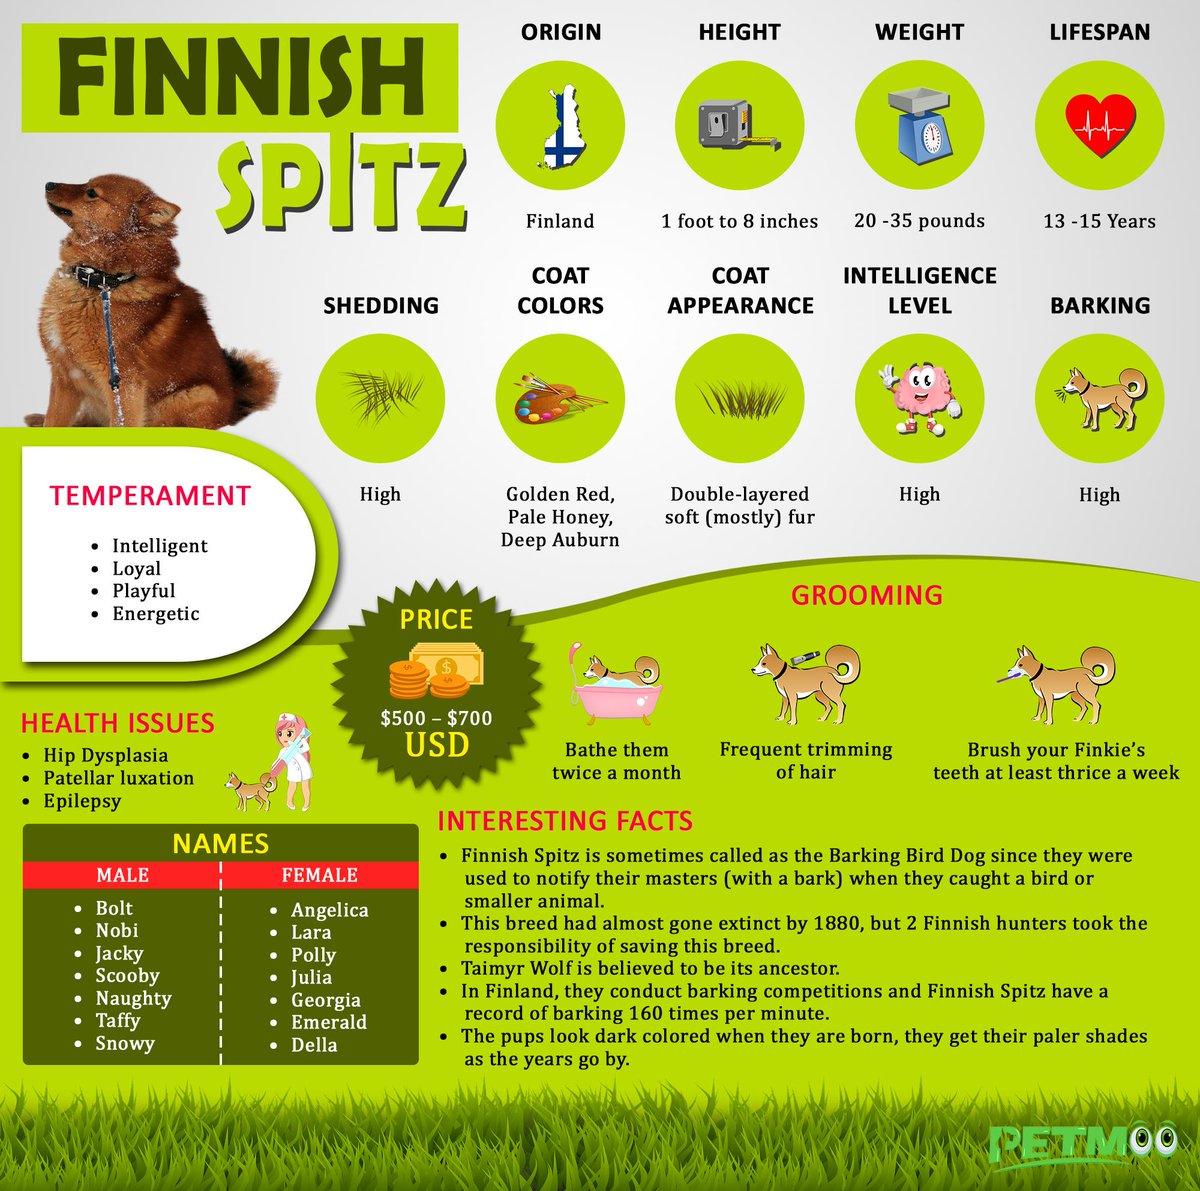 Finnish Spitz
#petmoo #pets #odgs #dogbreeds #doginfographic #finnishspitz #finnishspitzinfographic